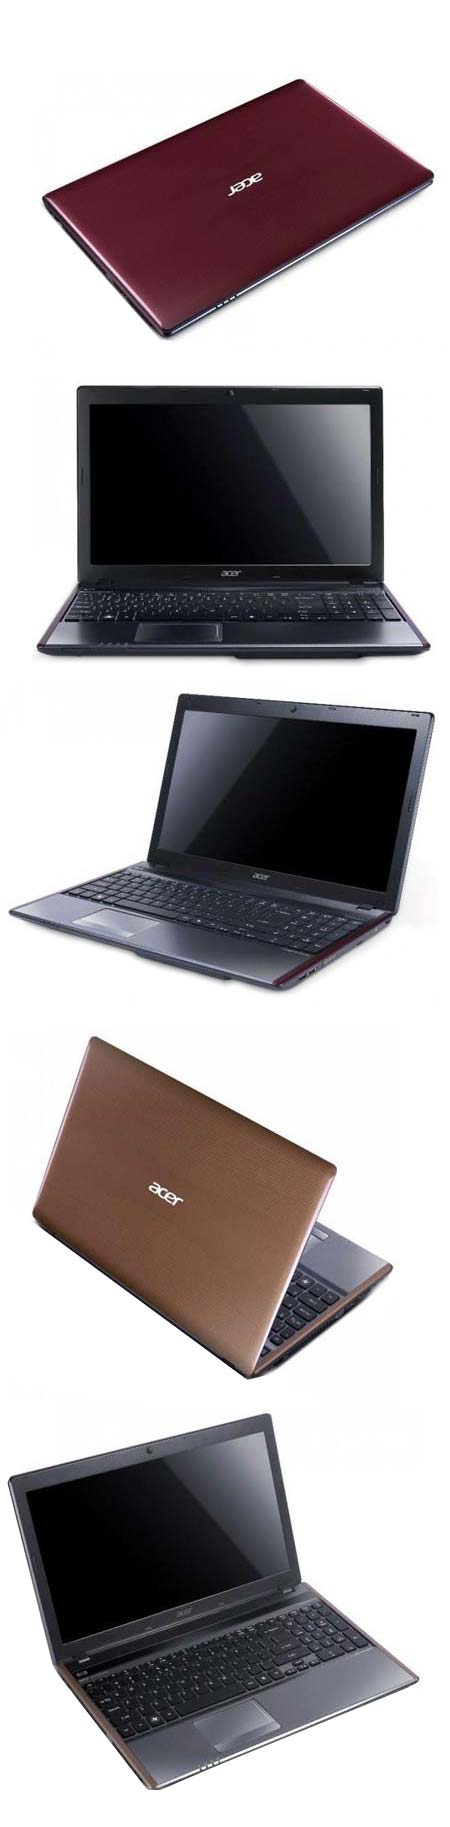 Старый знакомый с новым именем - ноутбук Acer Aspire 5755 Style!